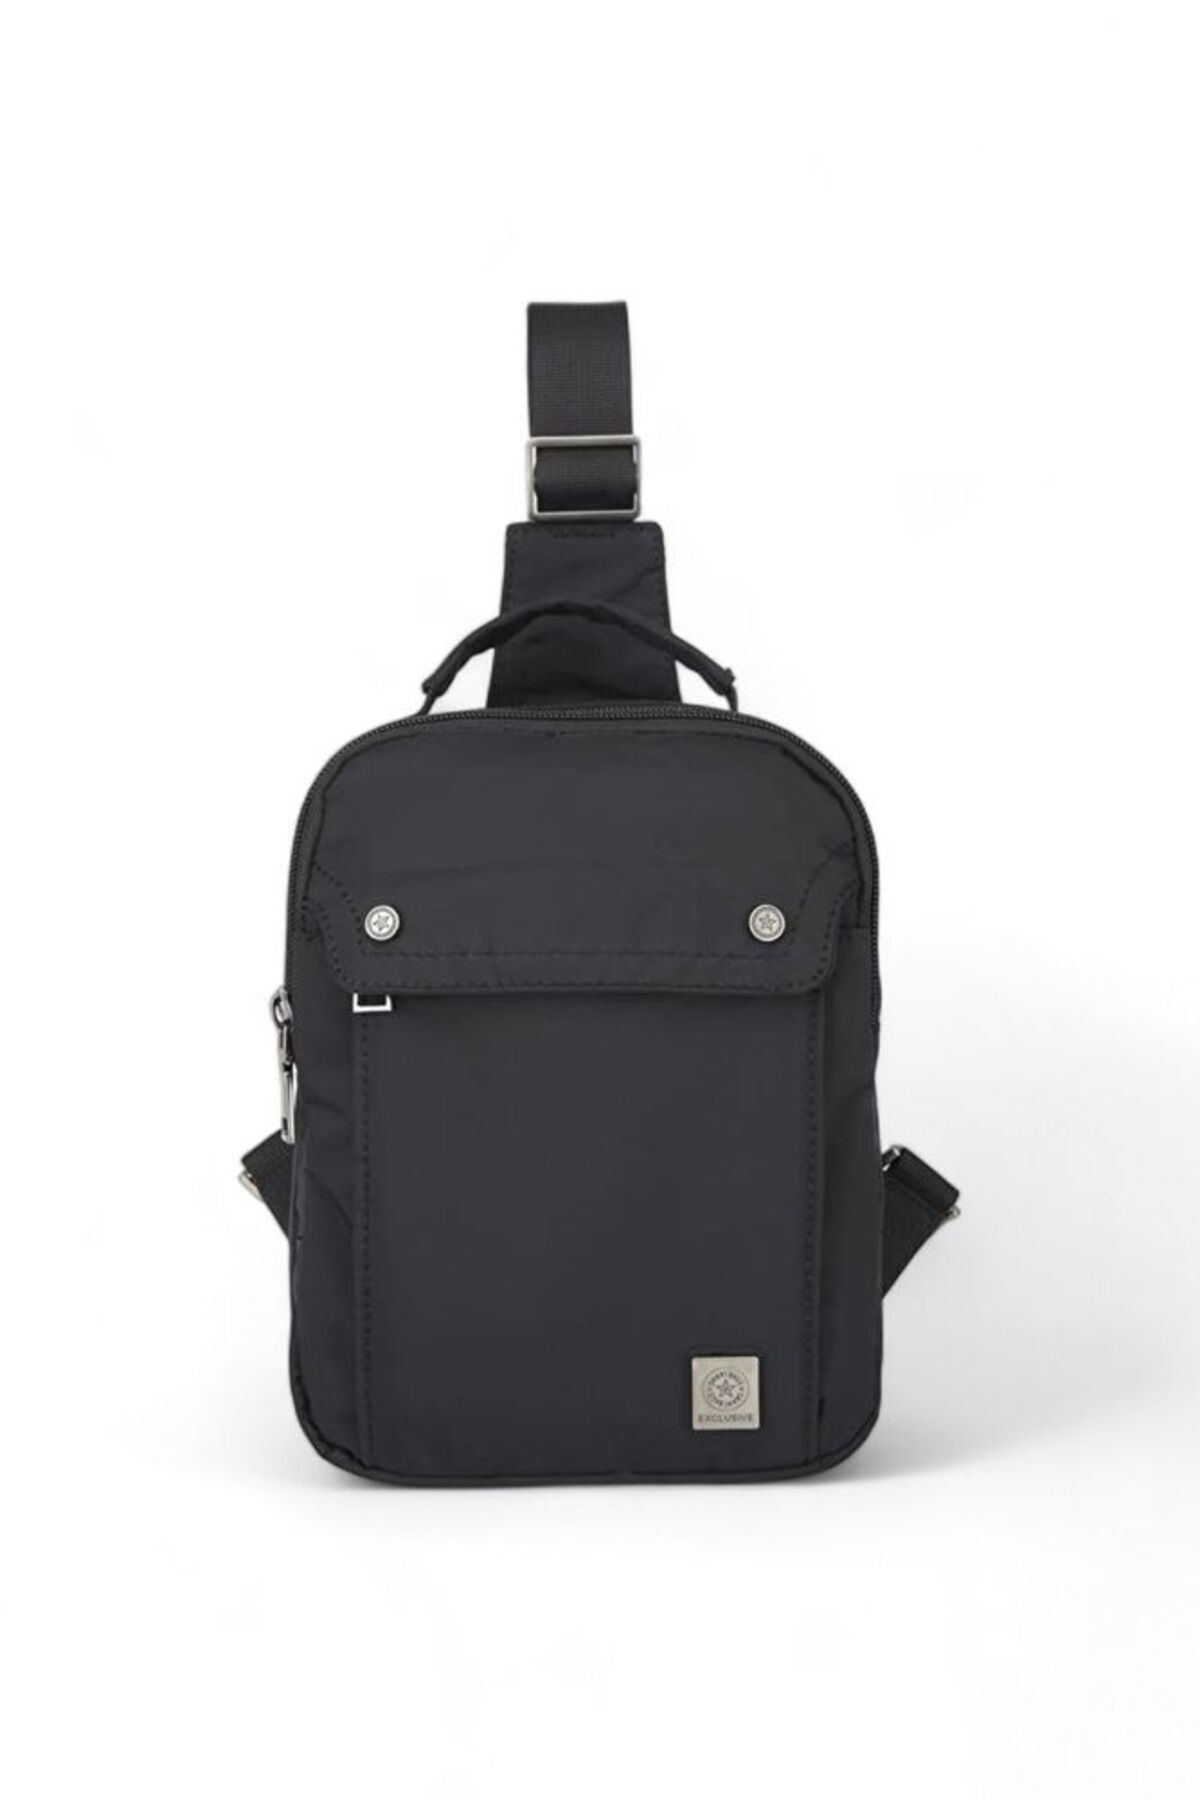 Smart Bags Exclusive Serisi Uniseks Bodybag Omuz Çantası Smart Bags 8706